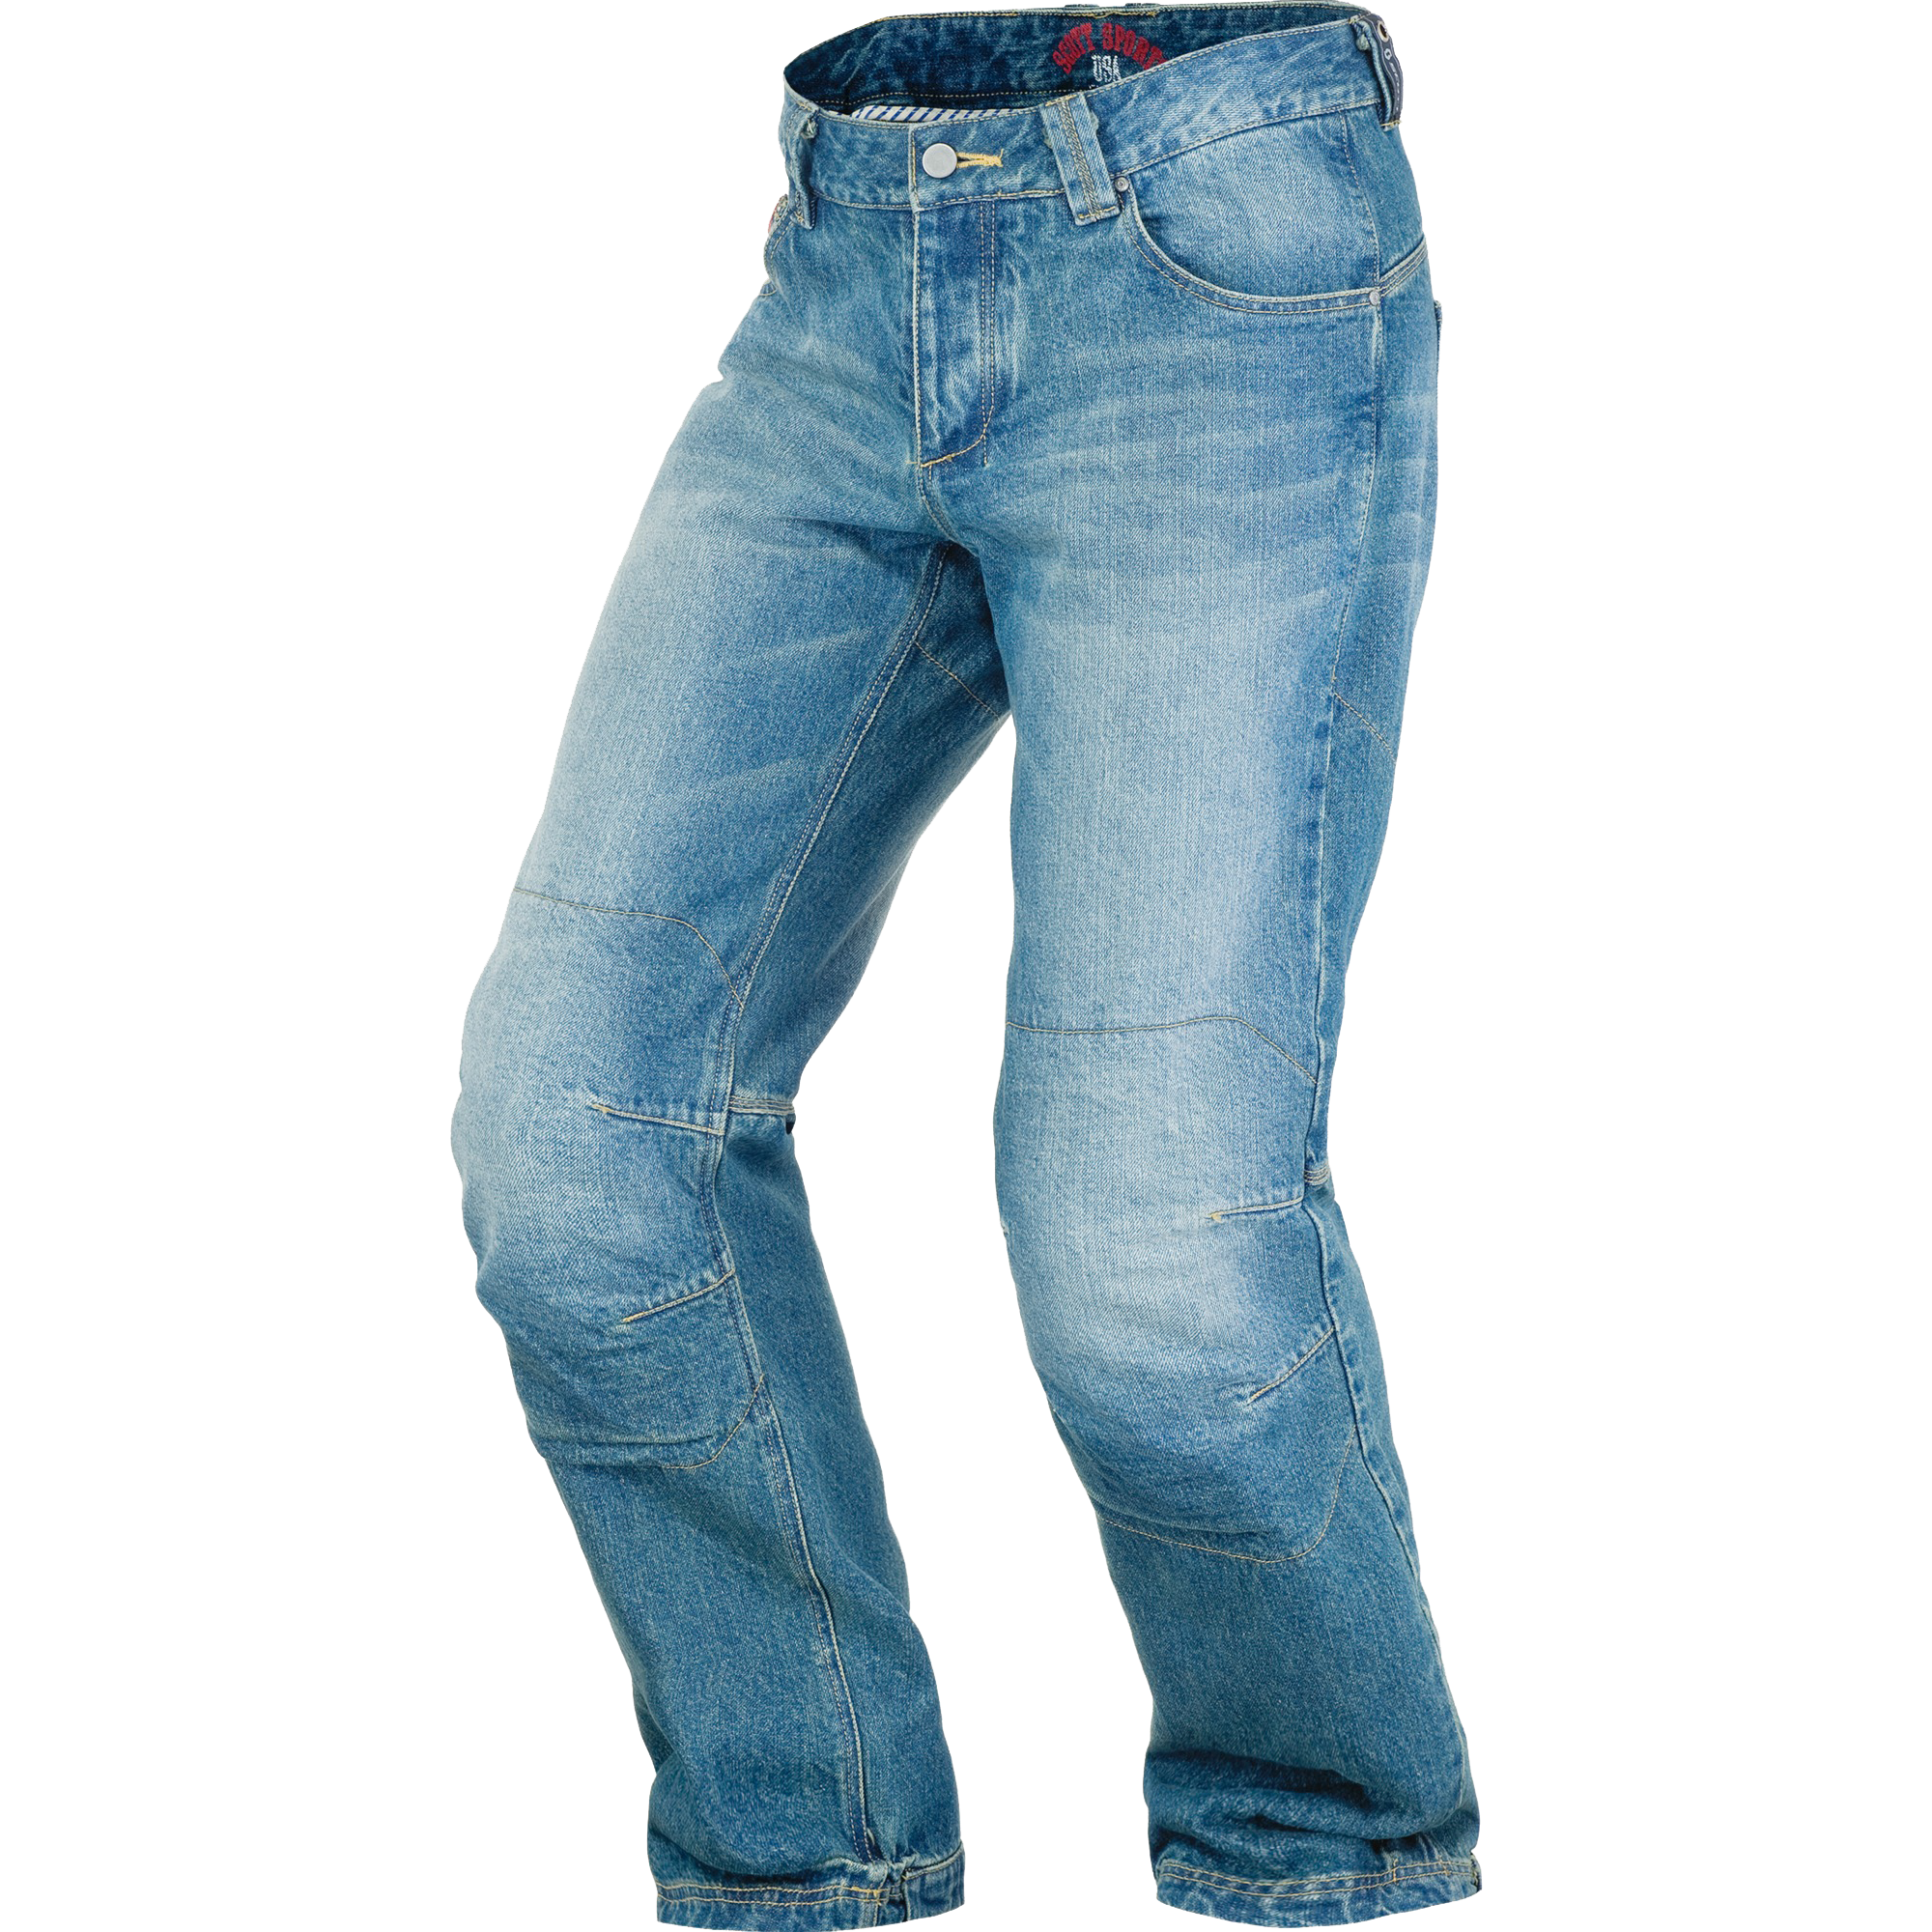 Imagens de calça jeans png